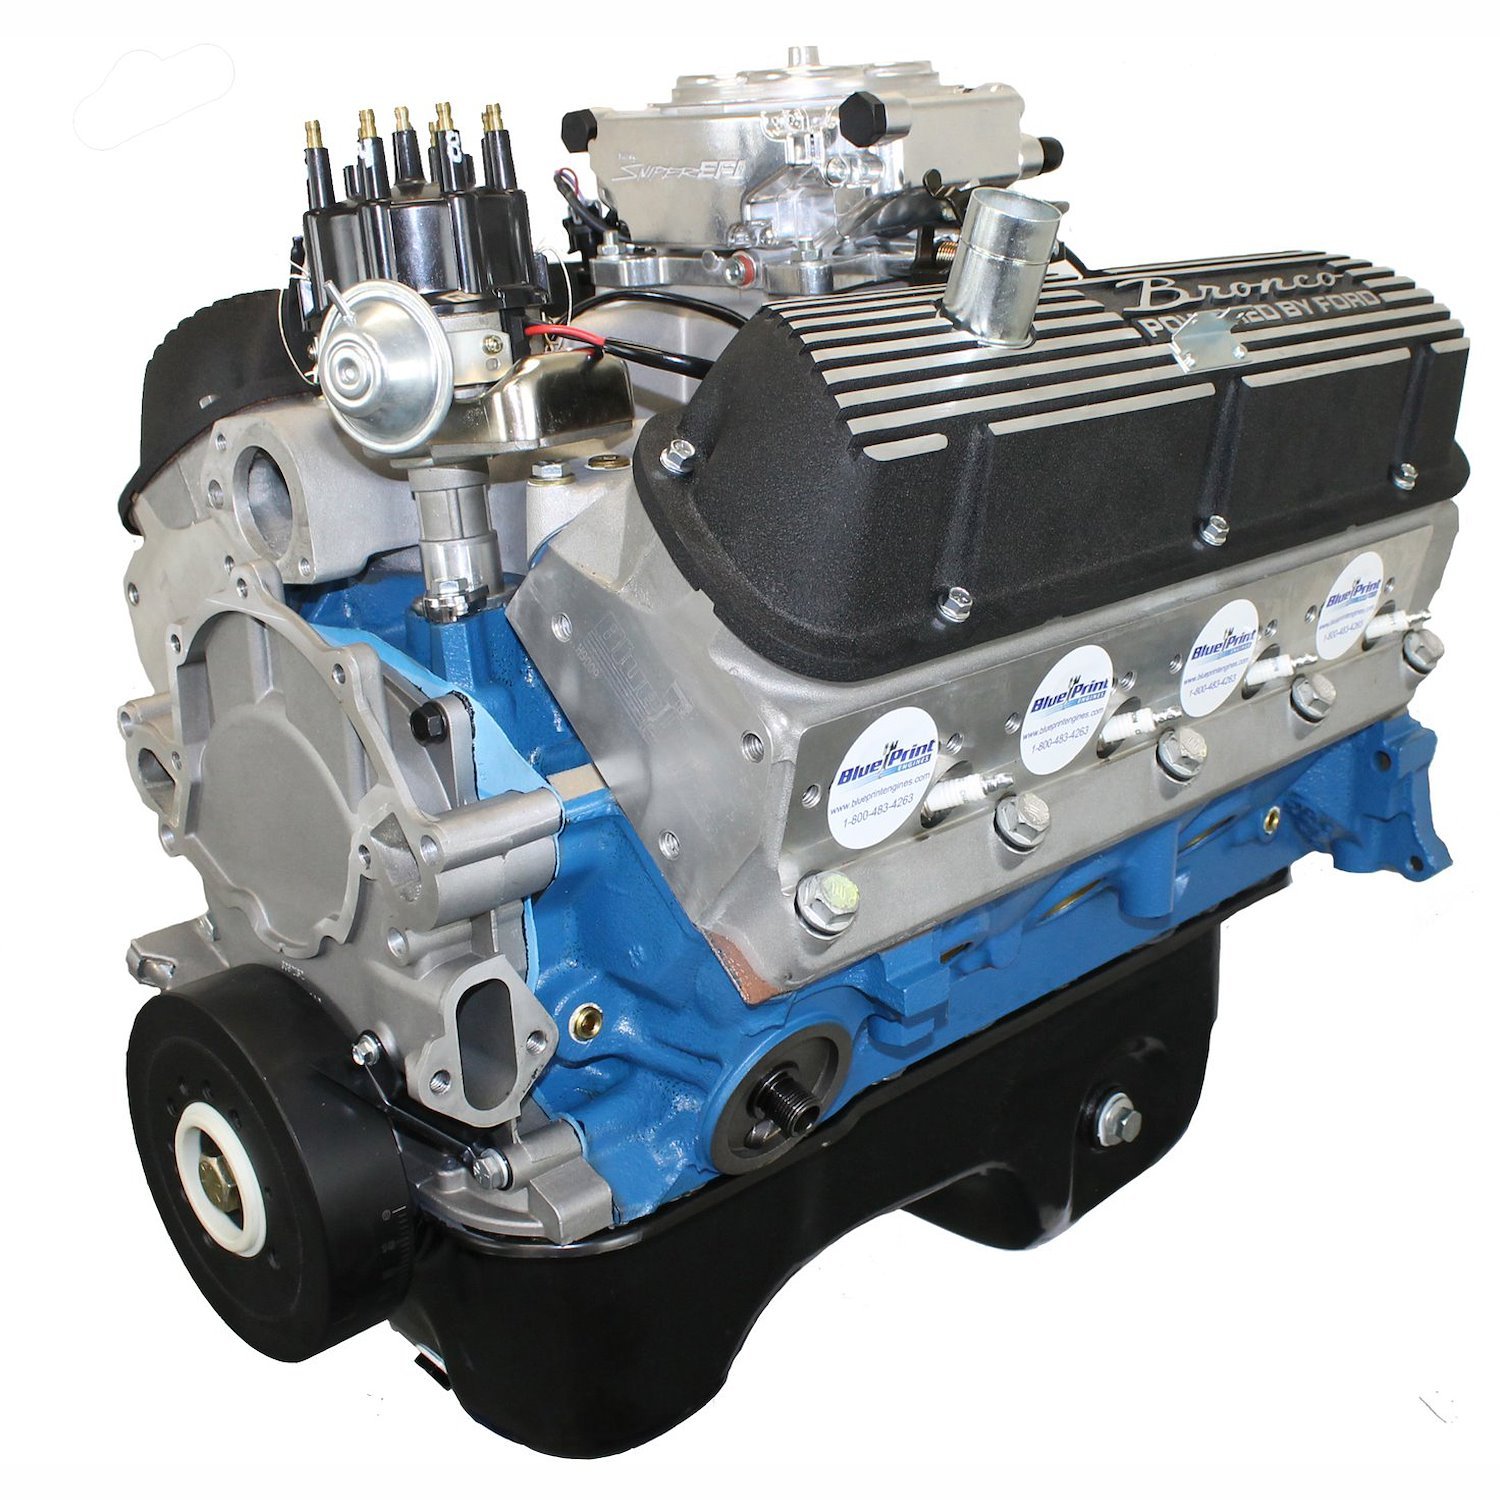 306 ci Bronco Edition Dress Engine w/EFI - Small Block Ford [365 HP, 365 FT.-LBS.]